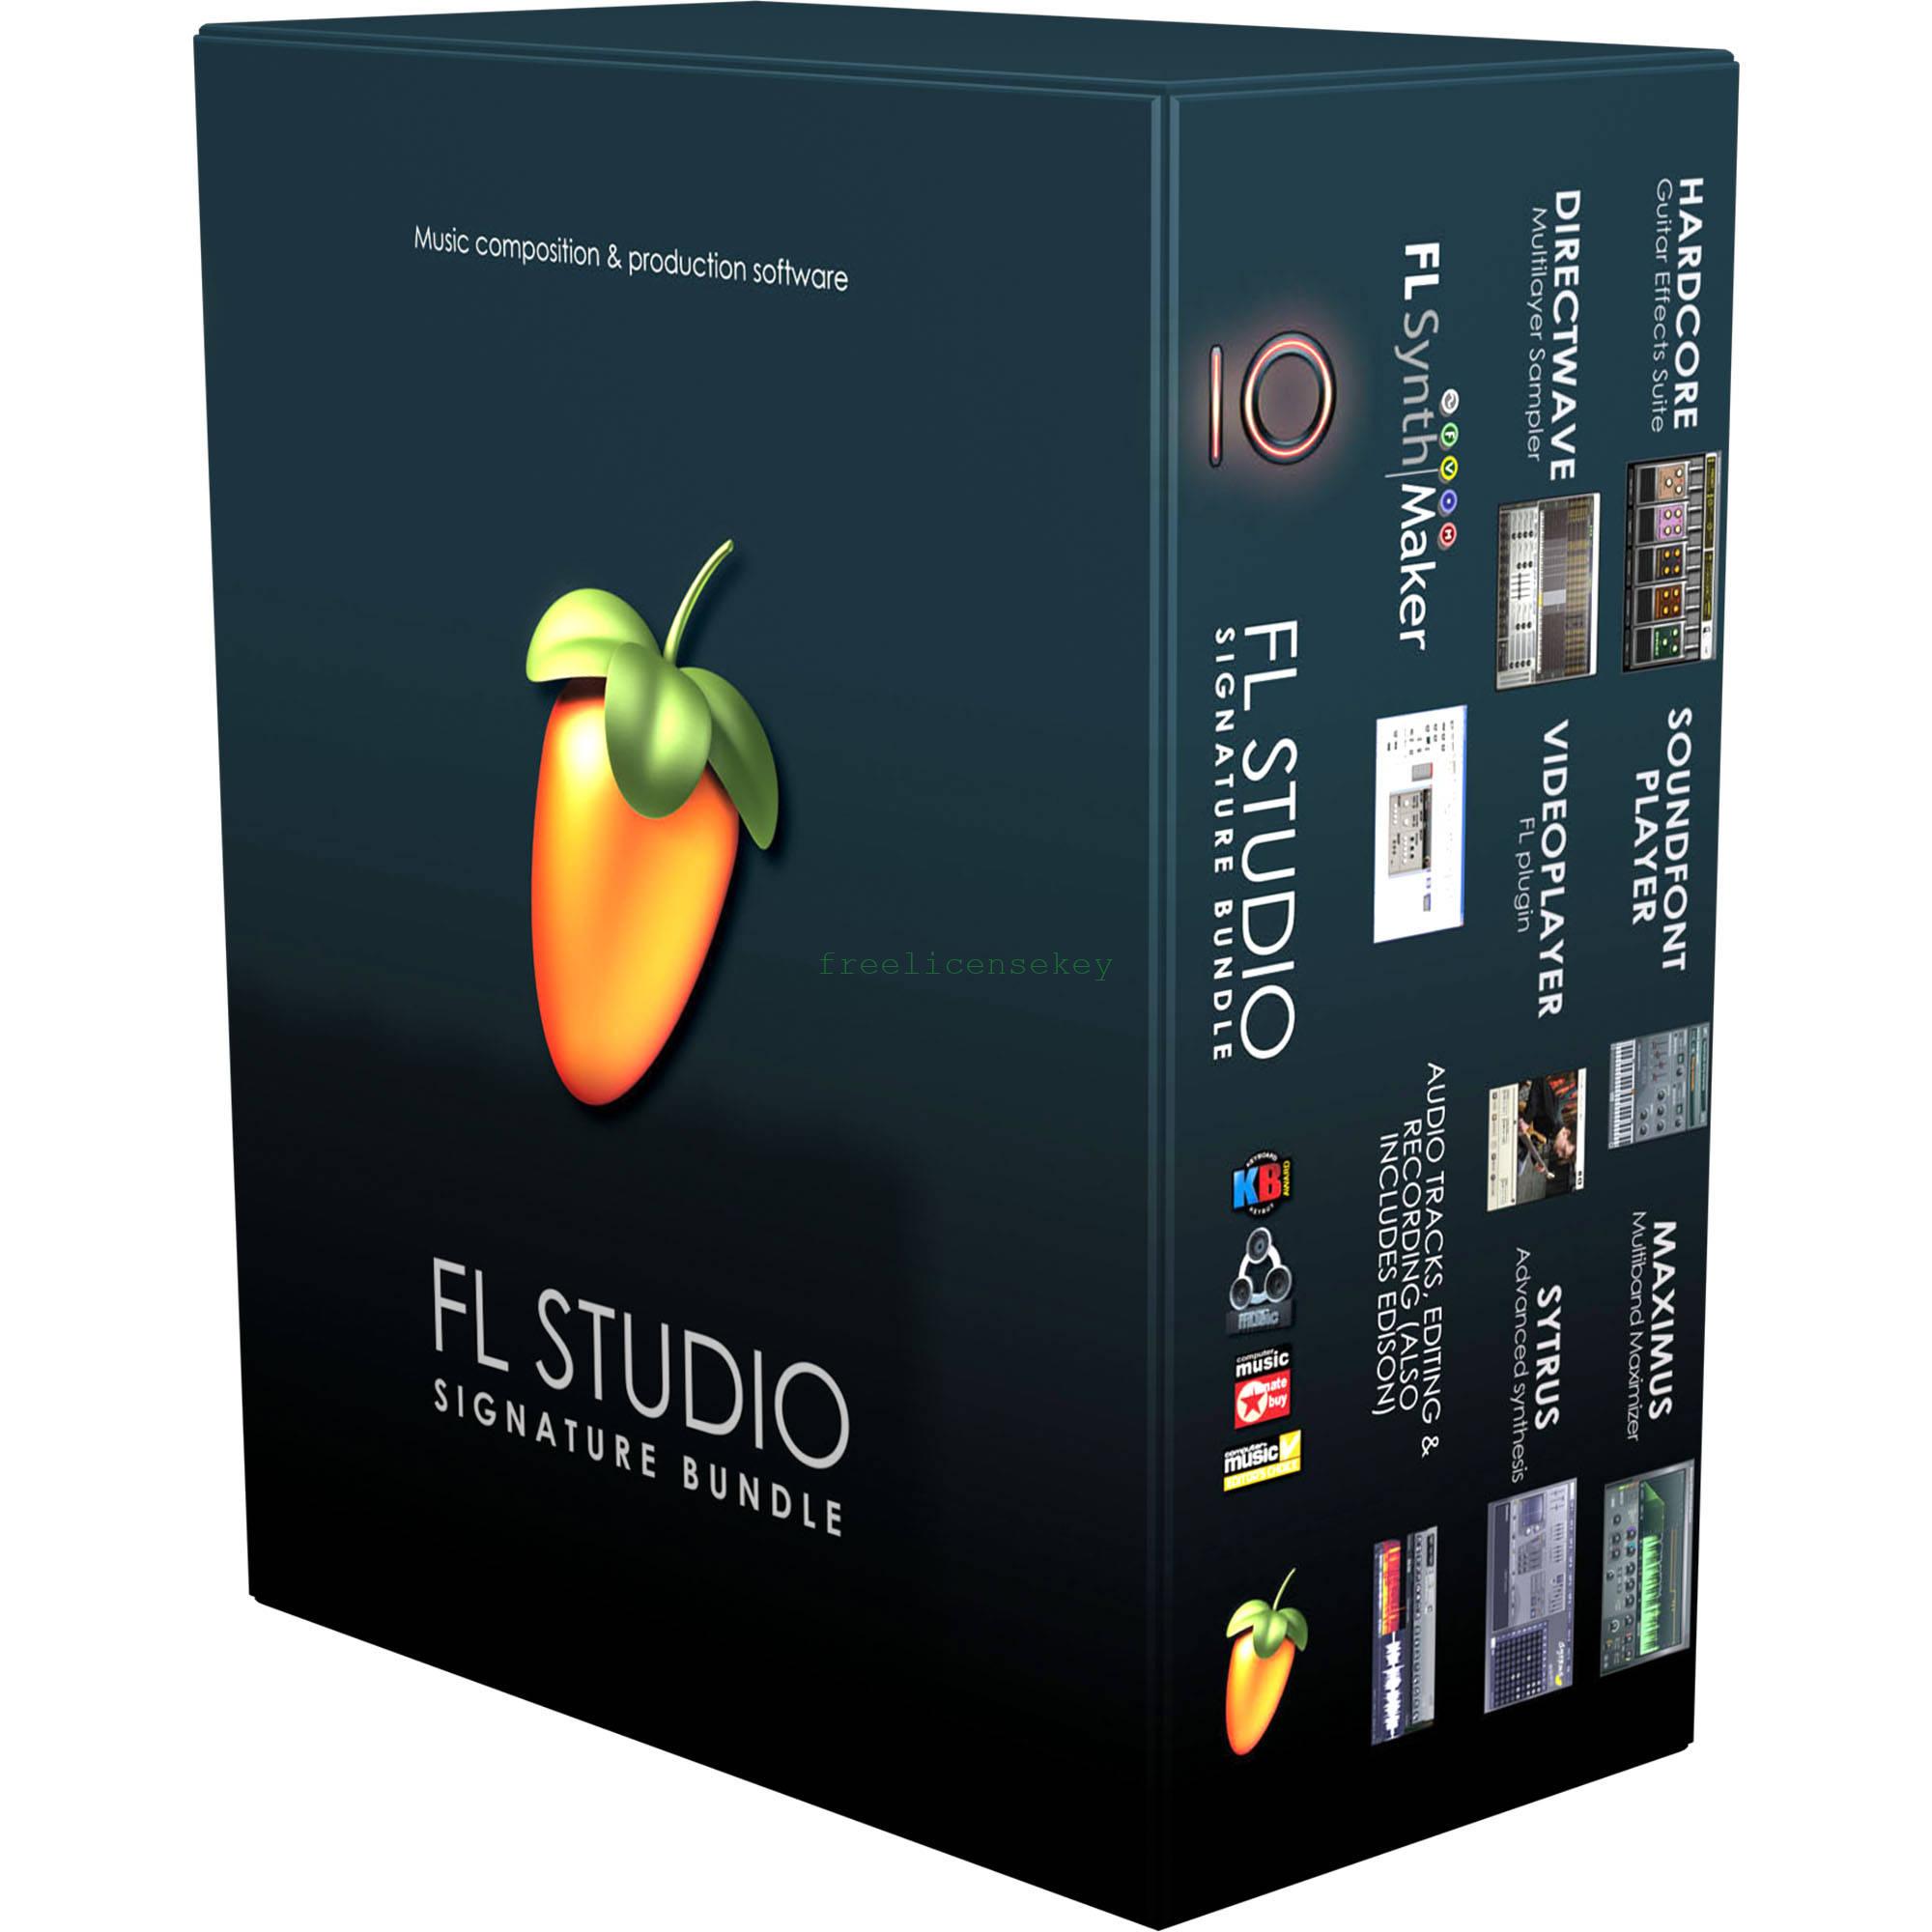 fl studio 9 torrent download full version